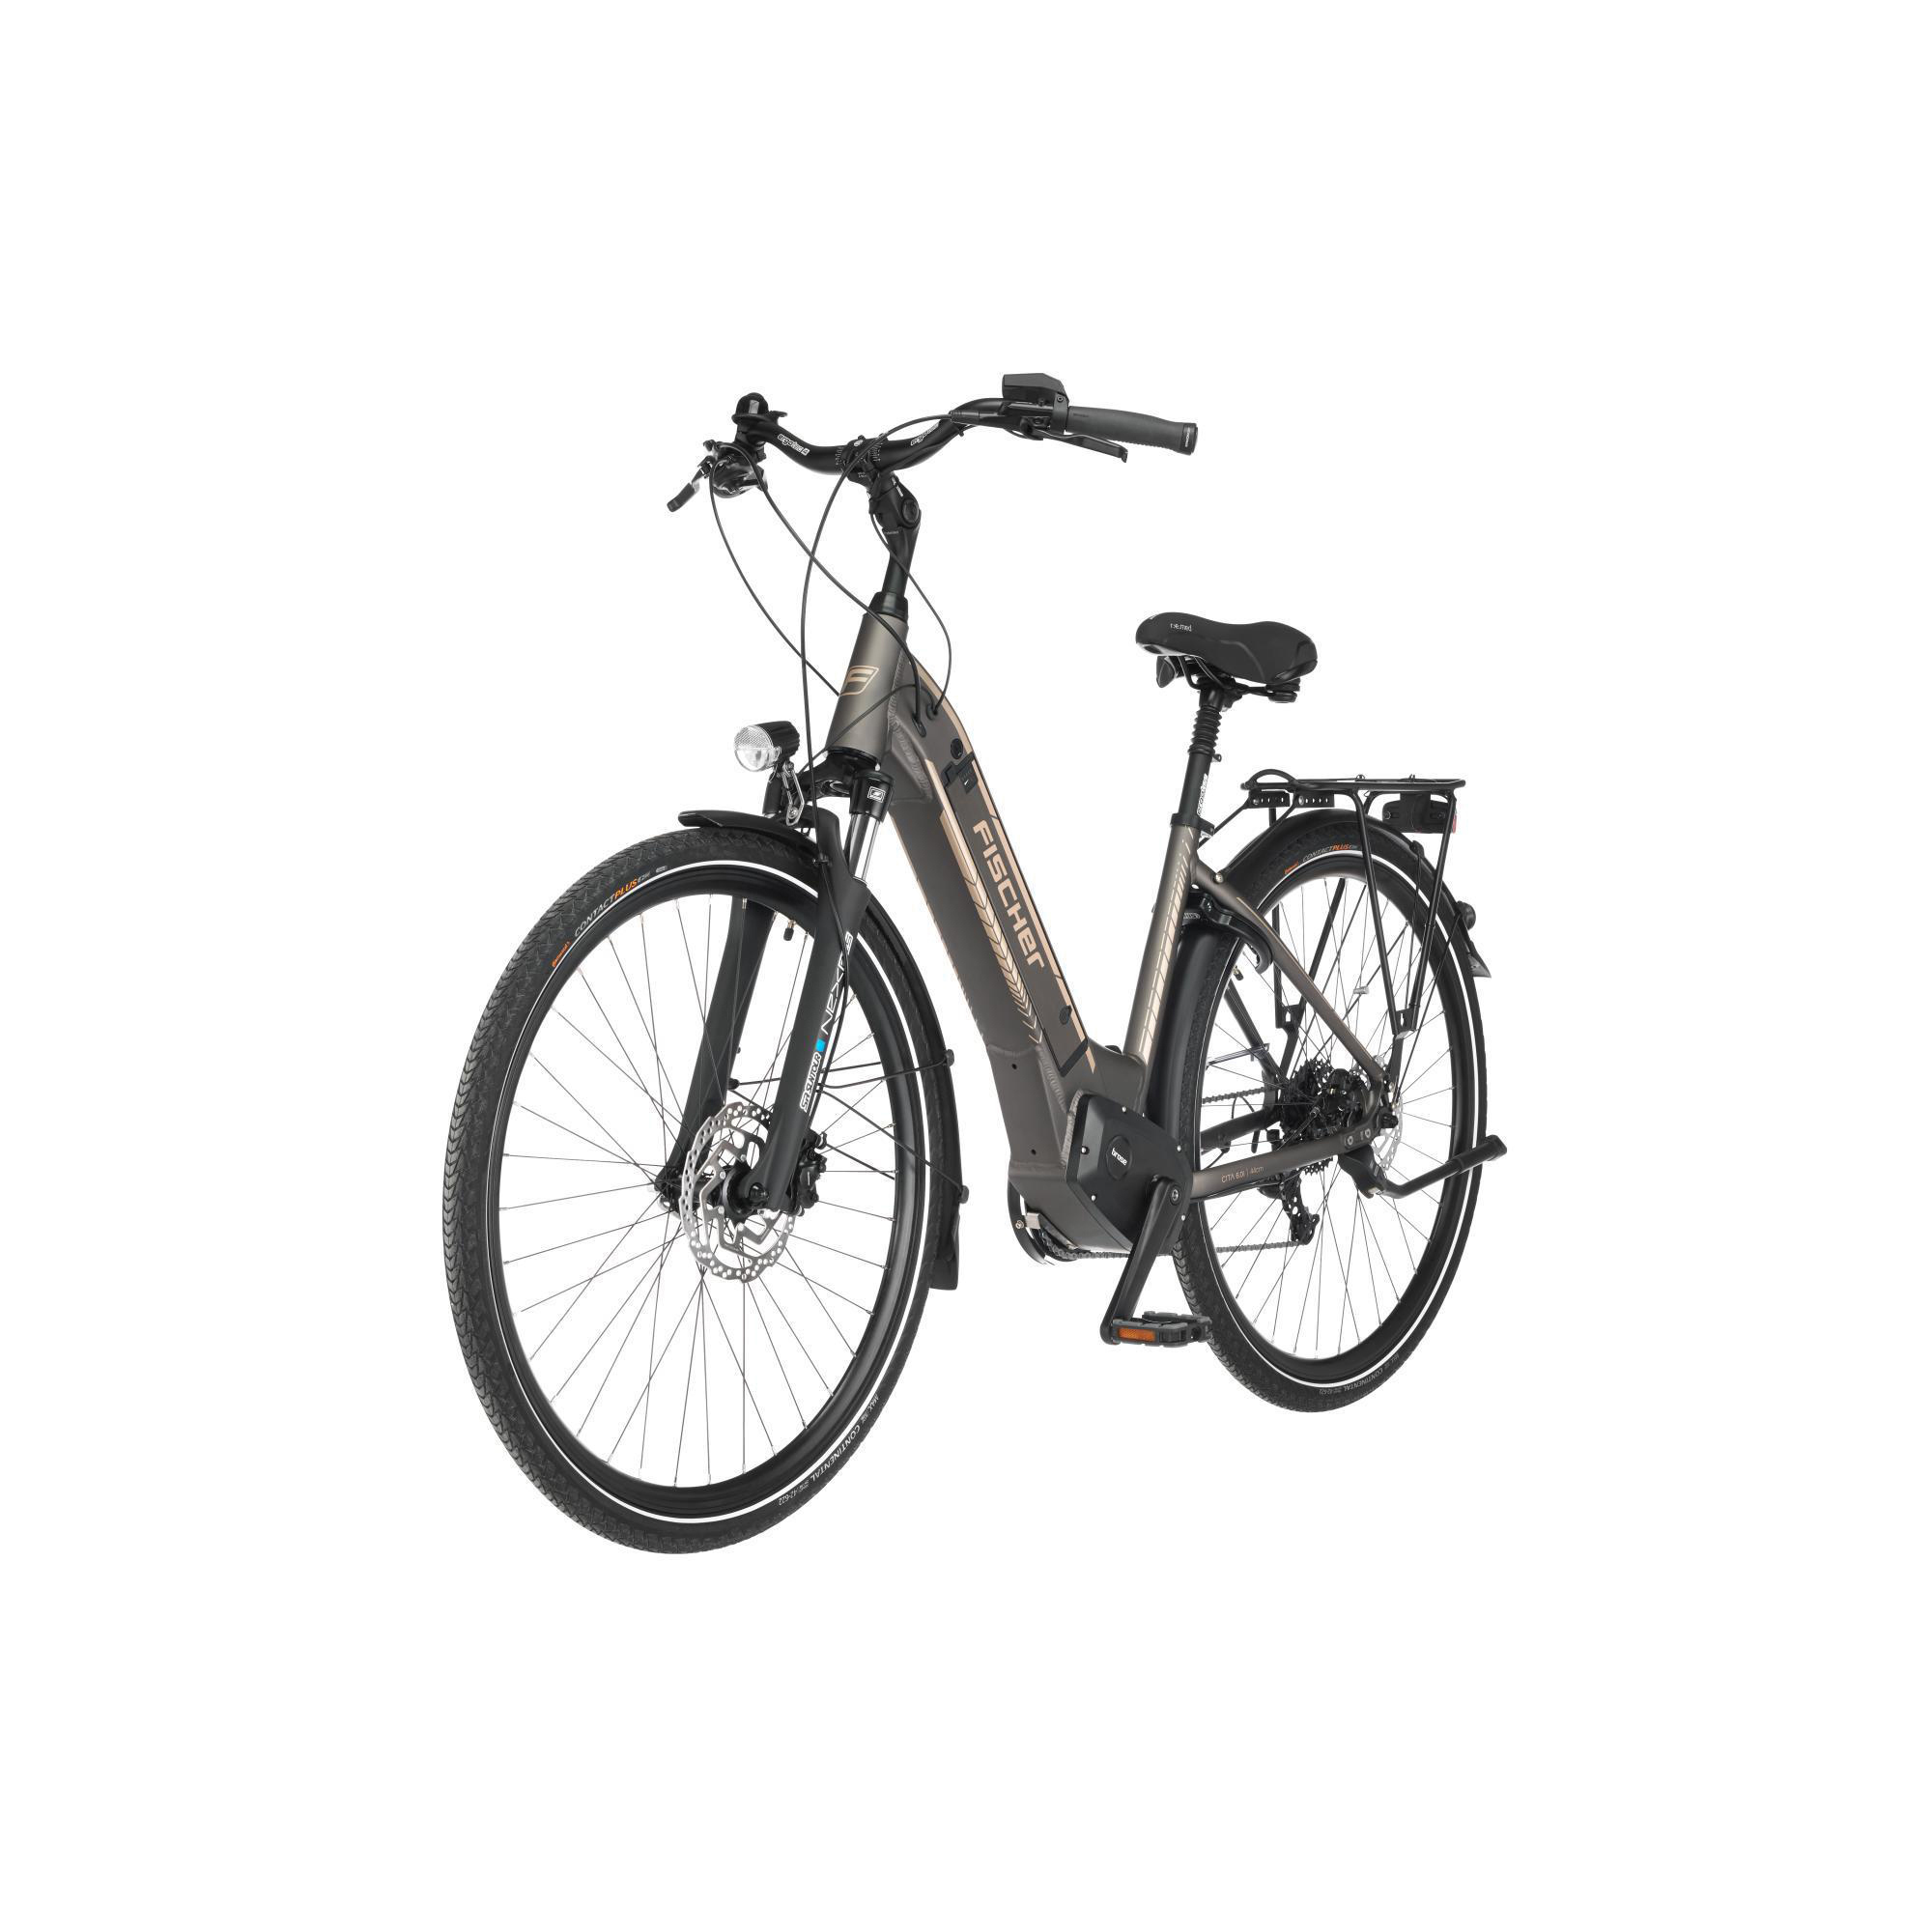 FISCHER CITA 6.0i Citybike Wh, platingrau Damen-Rad, matt) (Laufradgröße: Zoll, 504 28